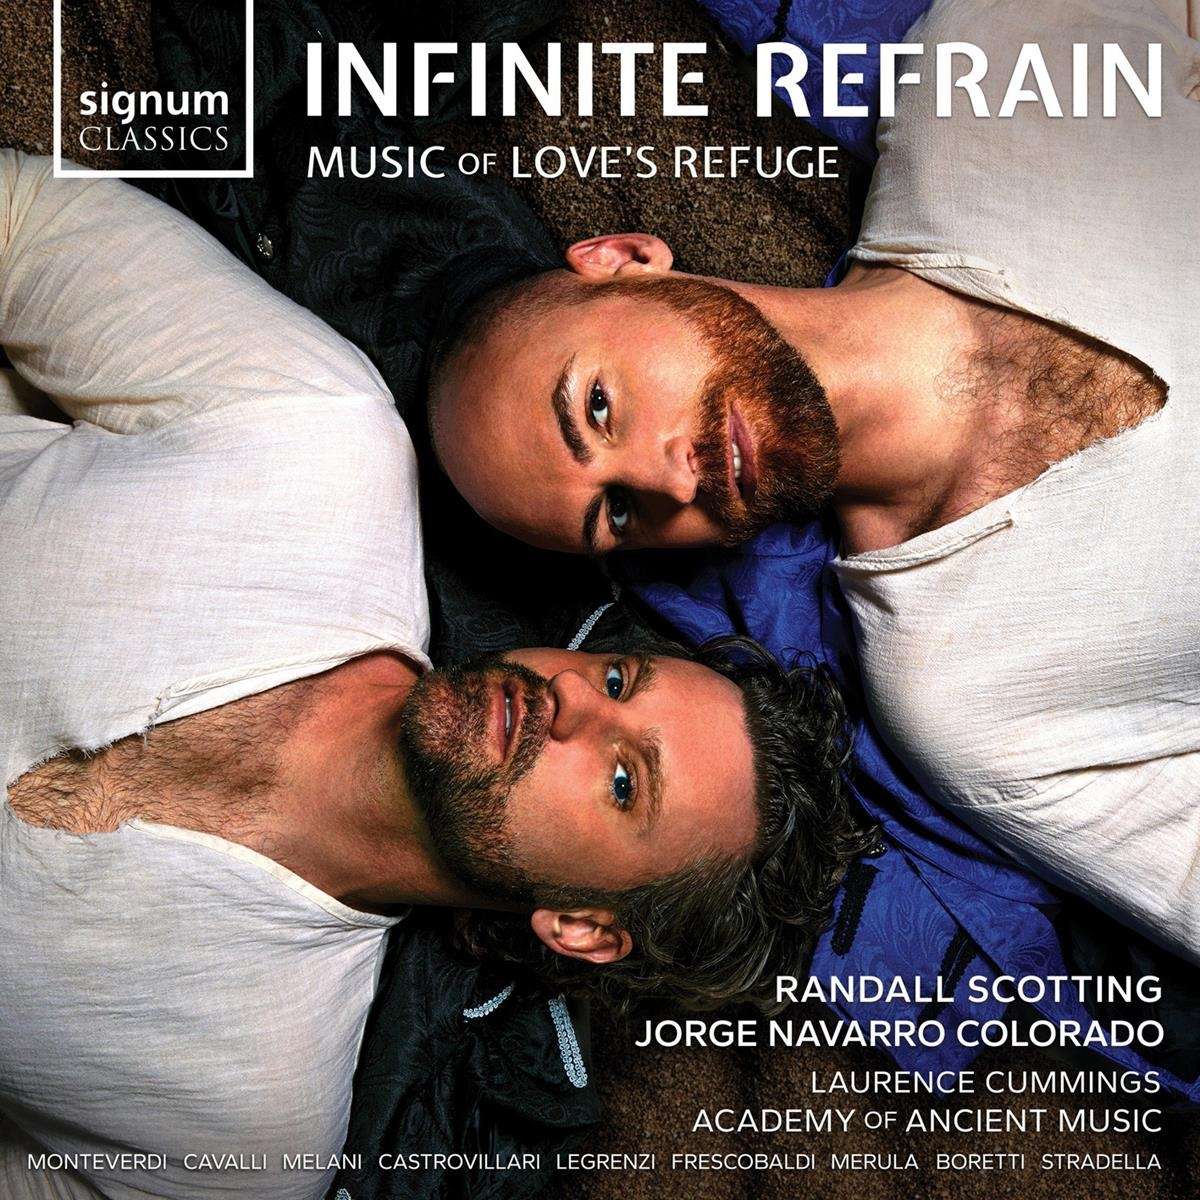 CD-Besprechung: Infinite Refrain, Randall Scotting und Jorge Navarro Colorado  klassik-begeistert.de, 12. Mai 2024